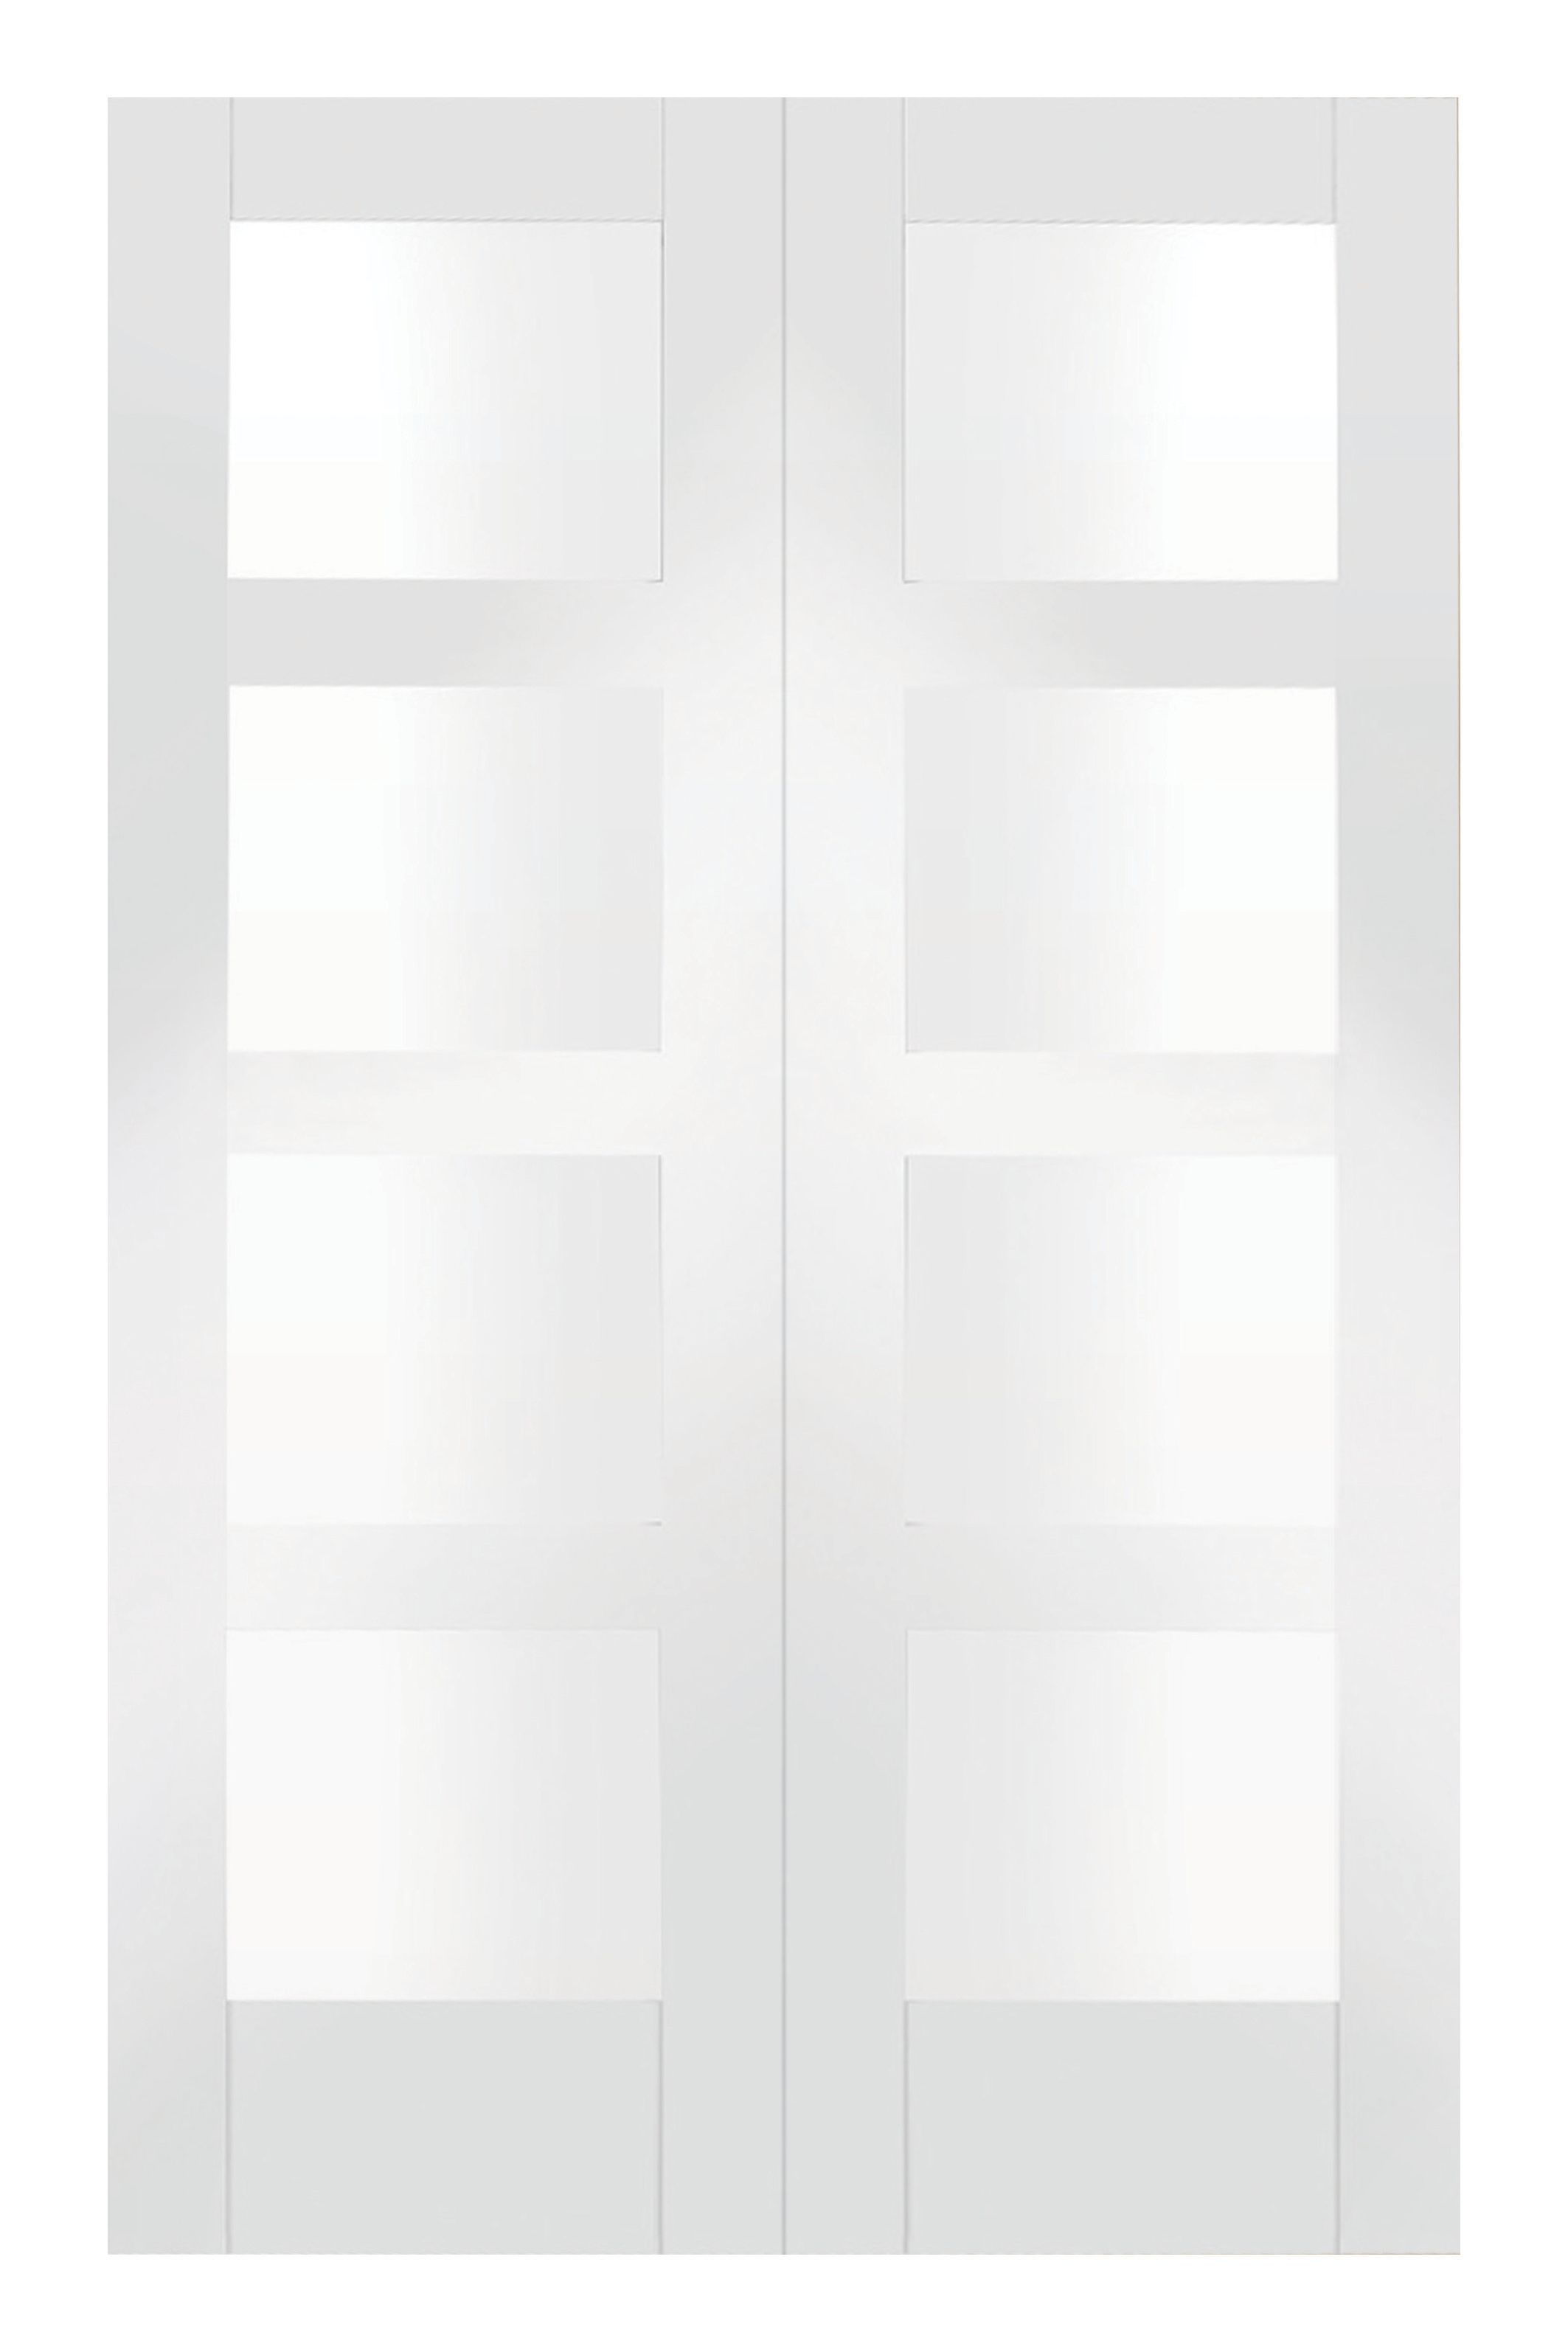 Image of Wickes Barton White Fully Glazed MDF 4 Panel Rebated Internal Door Pair - 1981 x 1524mm